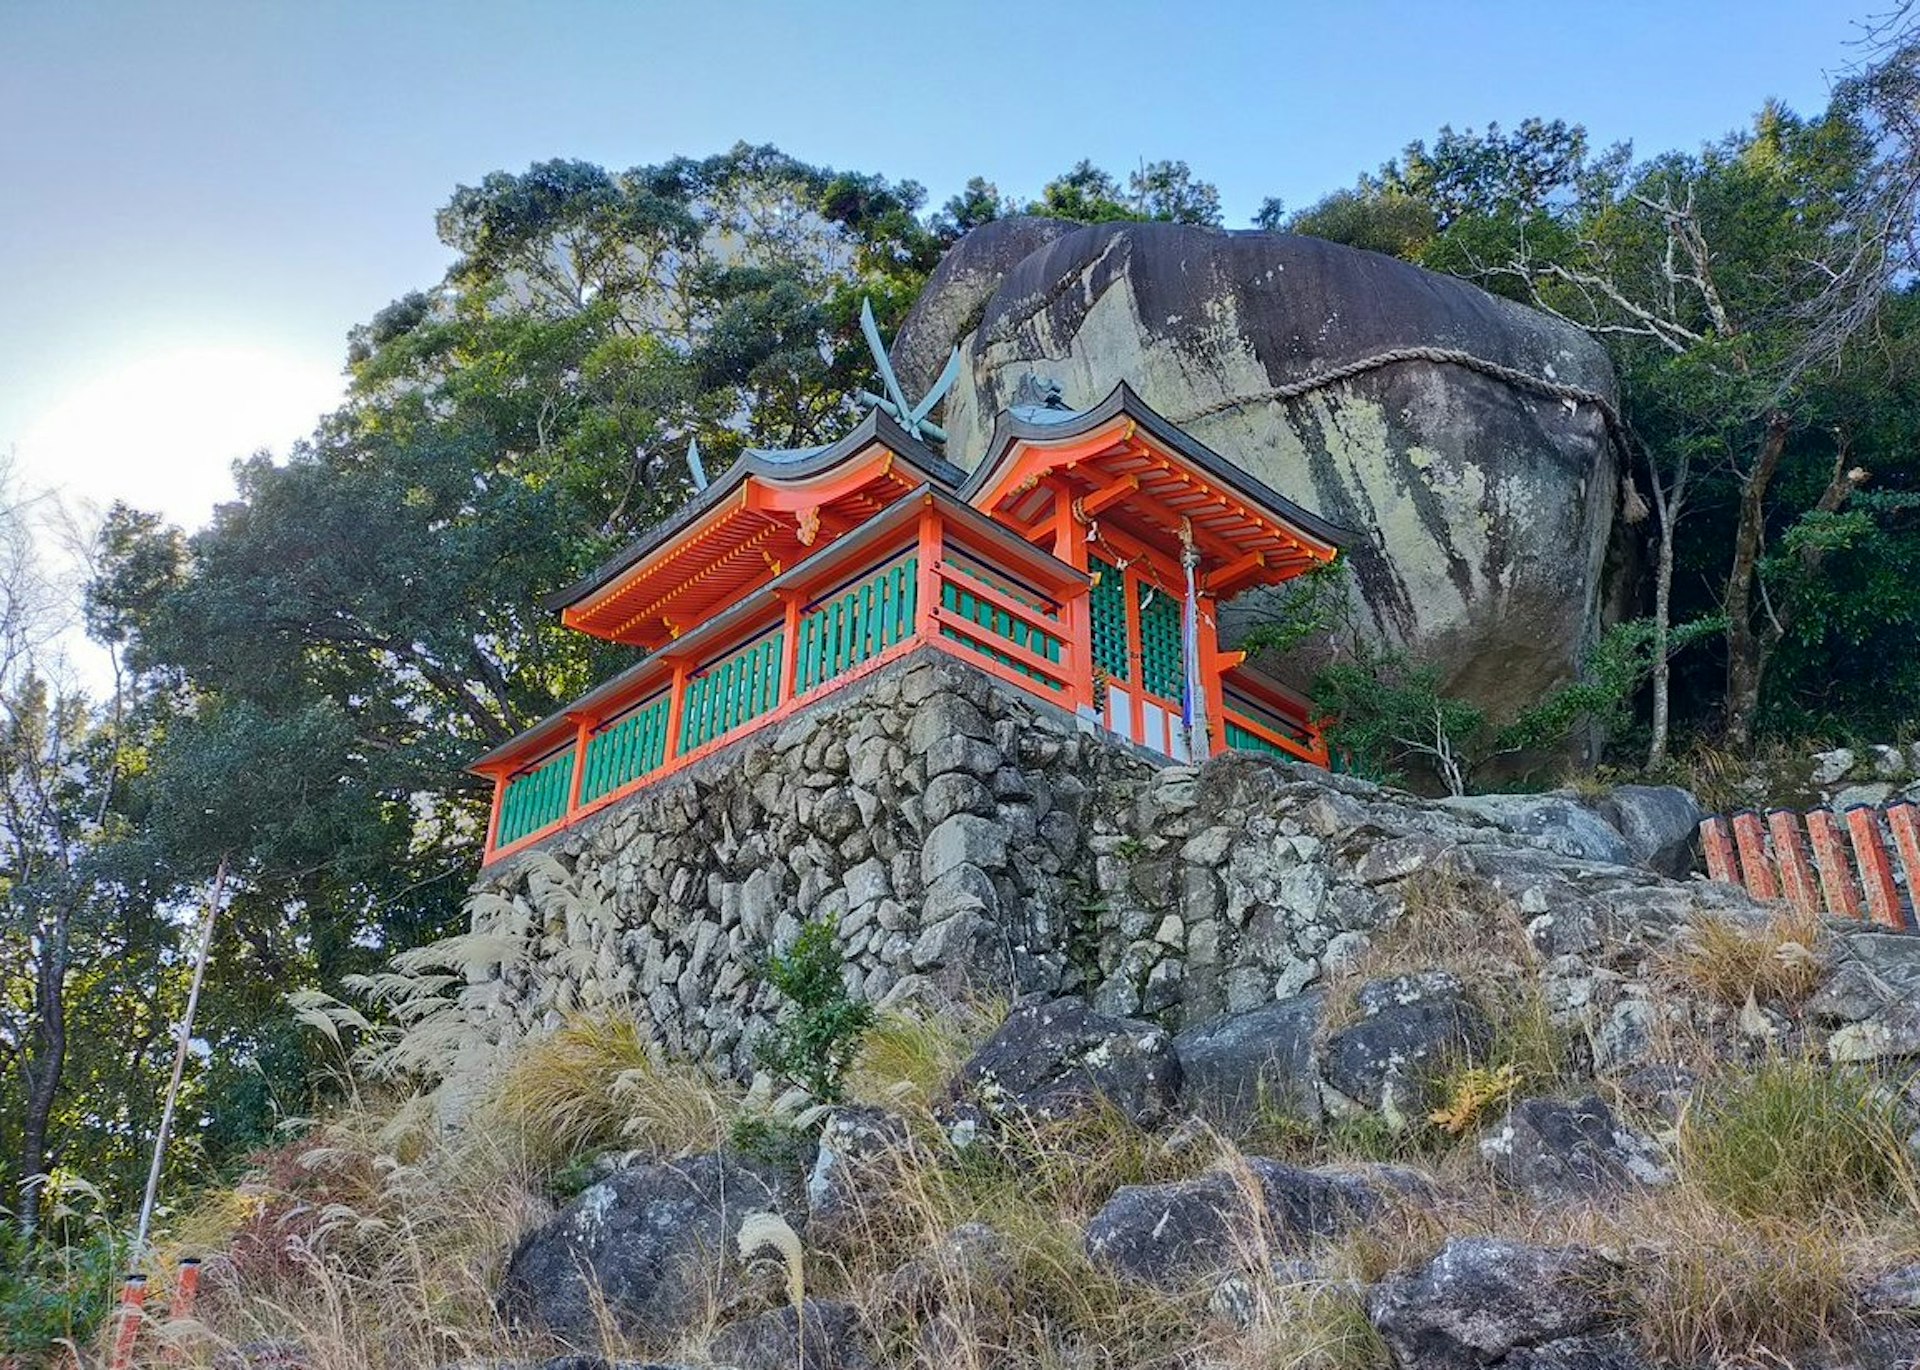 Kamikura Shrine is a traditional Shinto shrine built into a hillside in rural Japan.